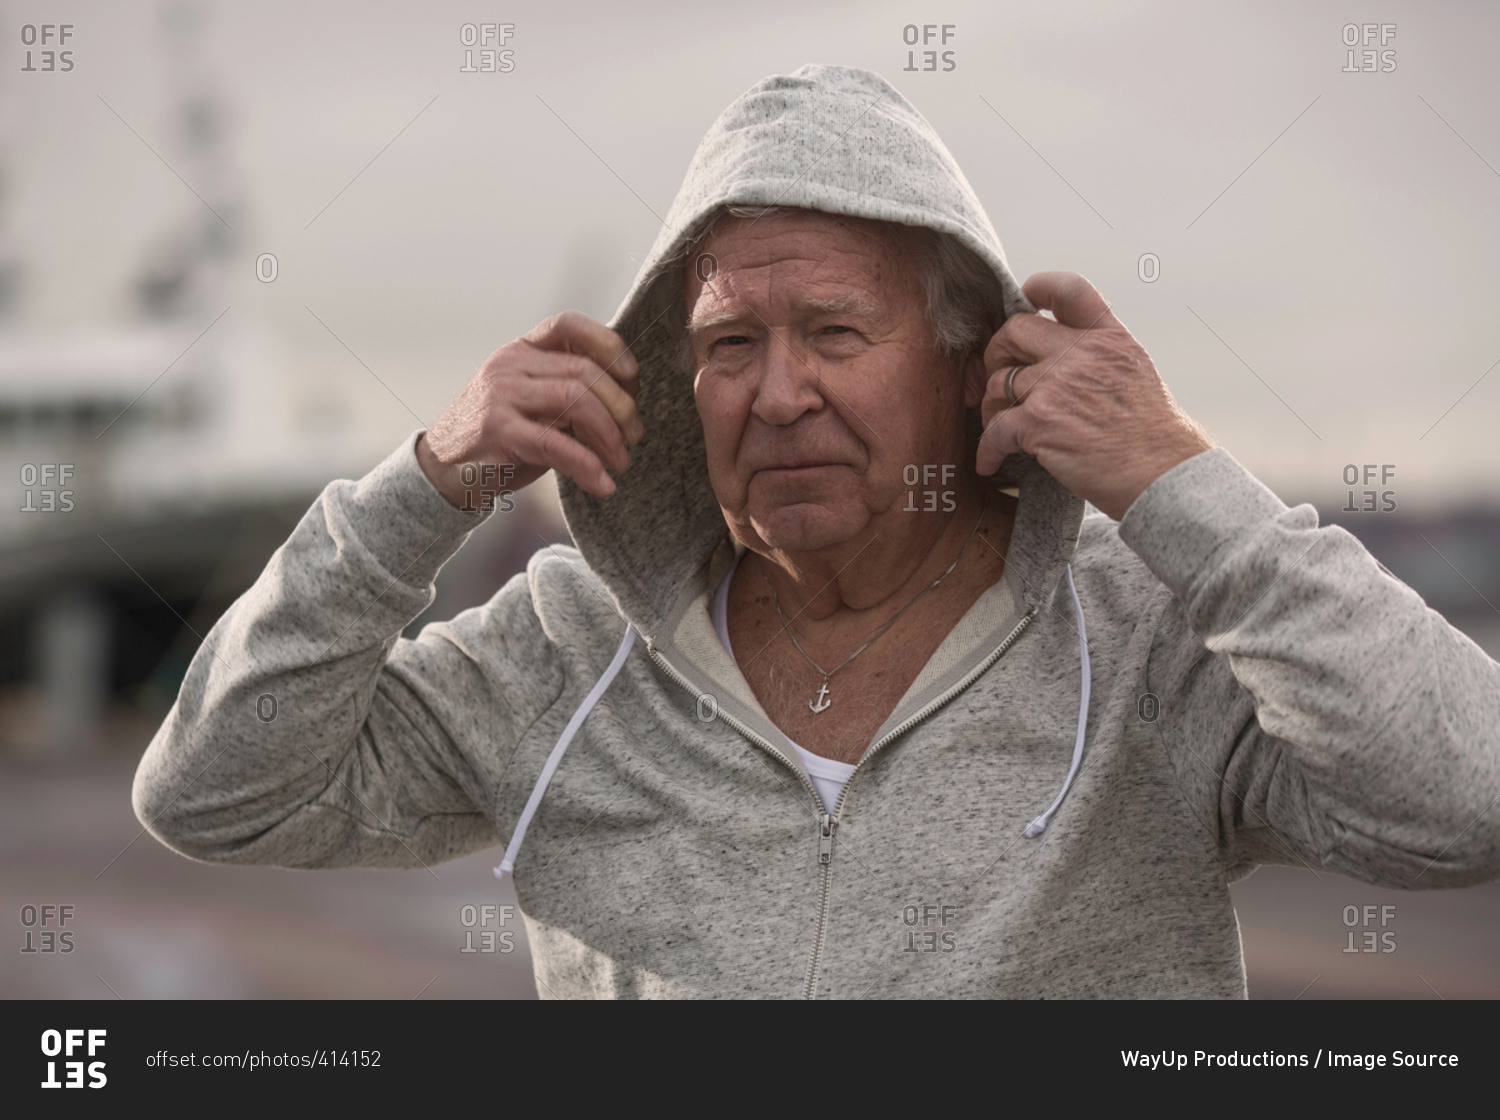 Man wearing hooded top looking at camera